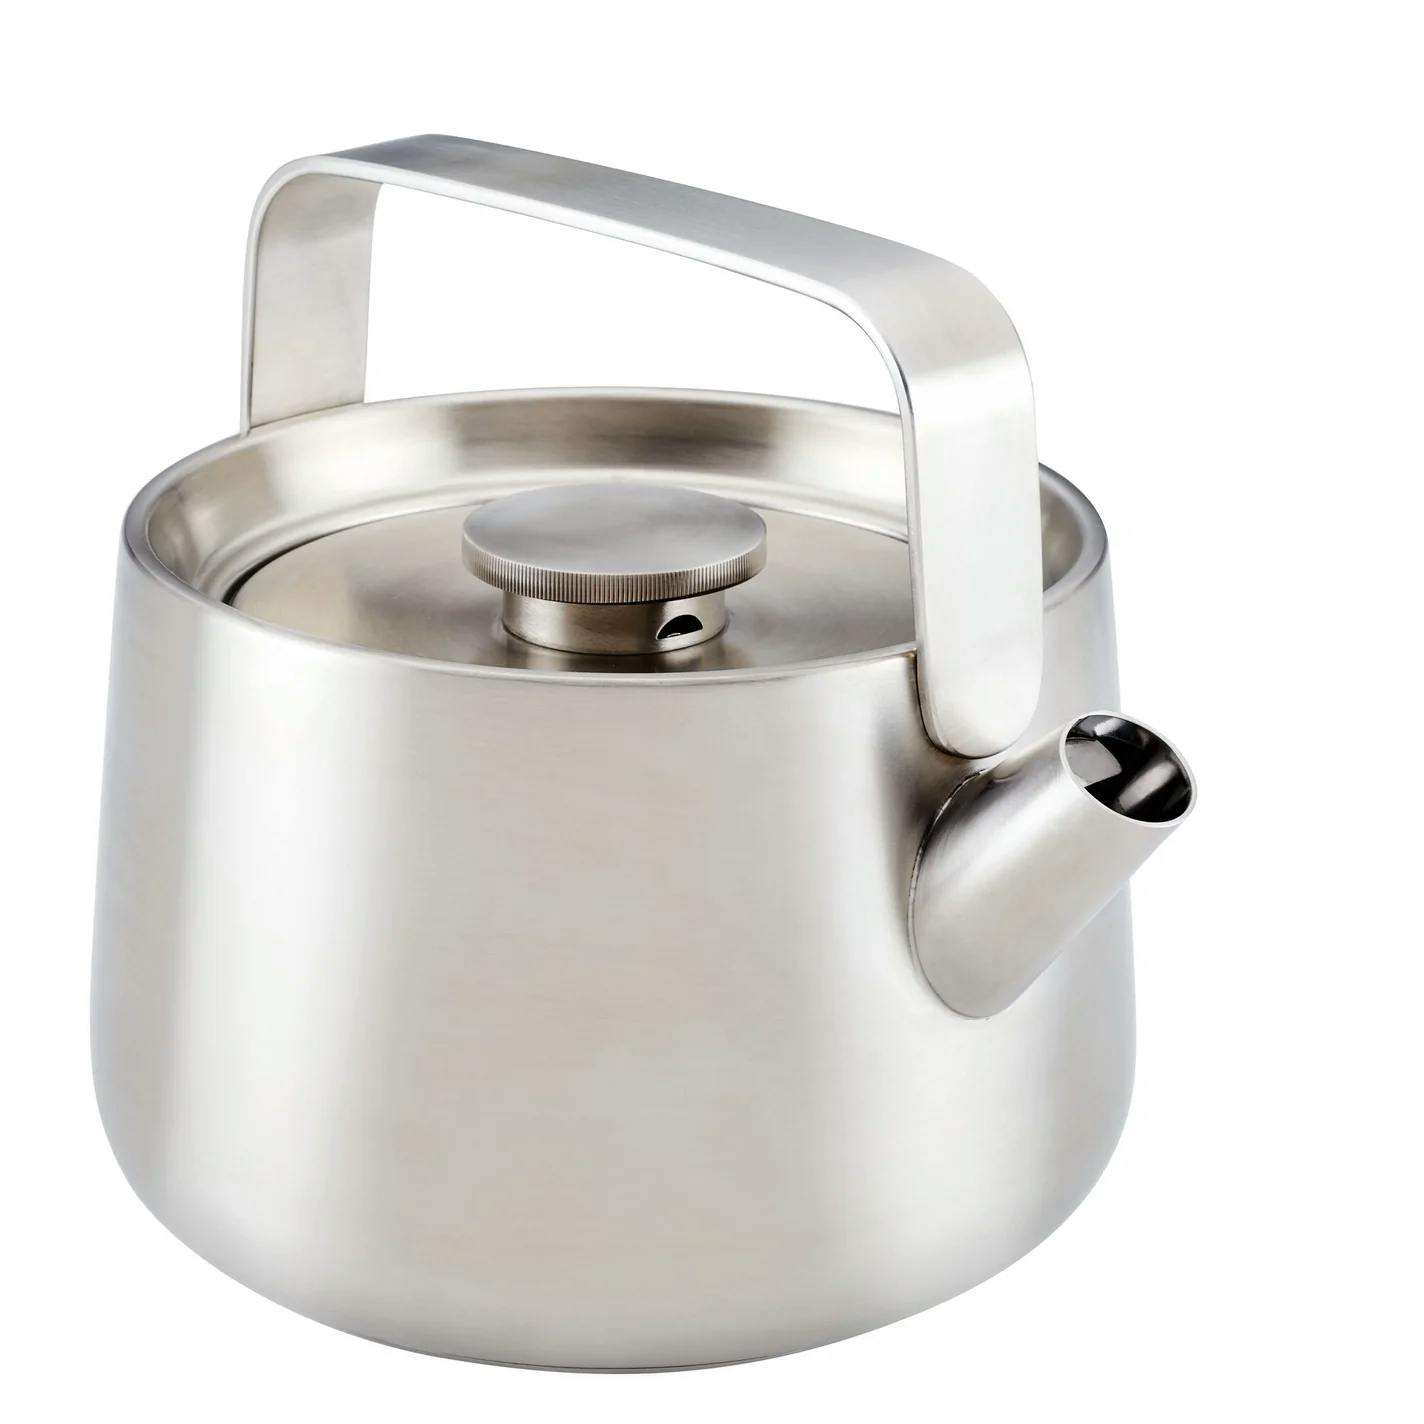  KitchenAid Teakettles Stainless Steel Whistling Teakettle, 1.9  Quart - Brushed Stainless Steel: Home & Kitchen